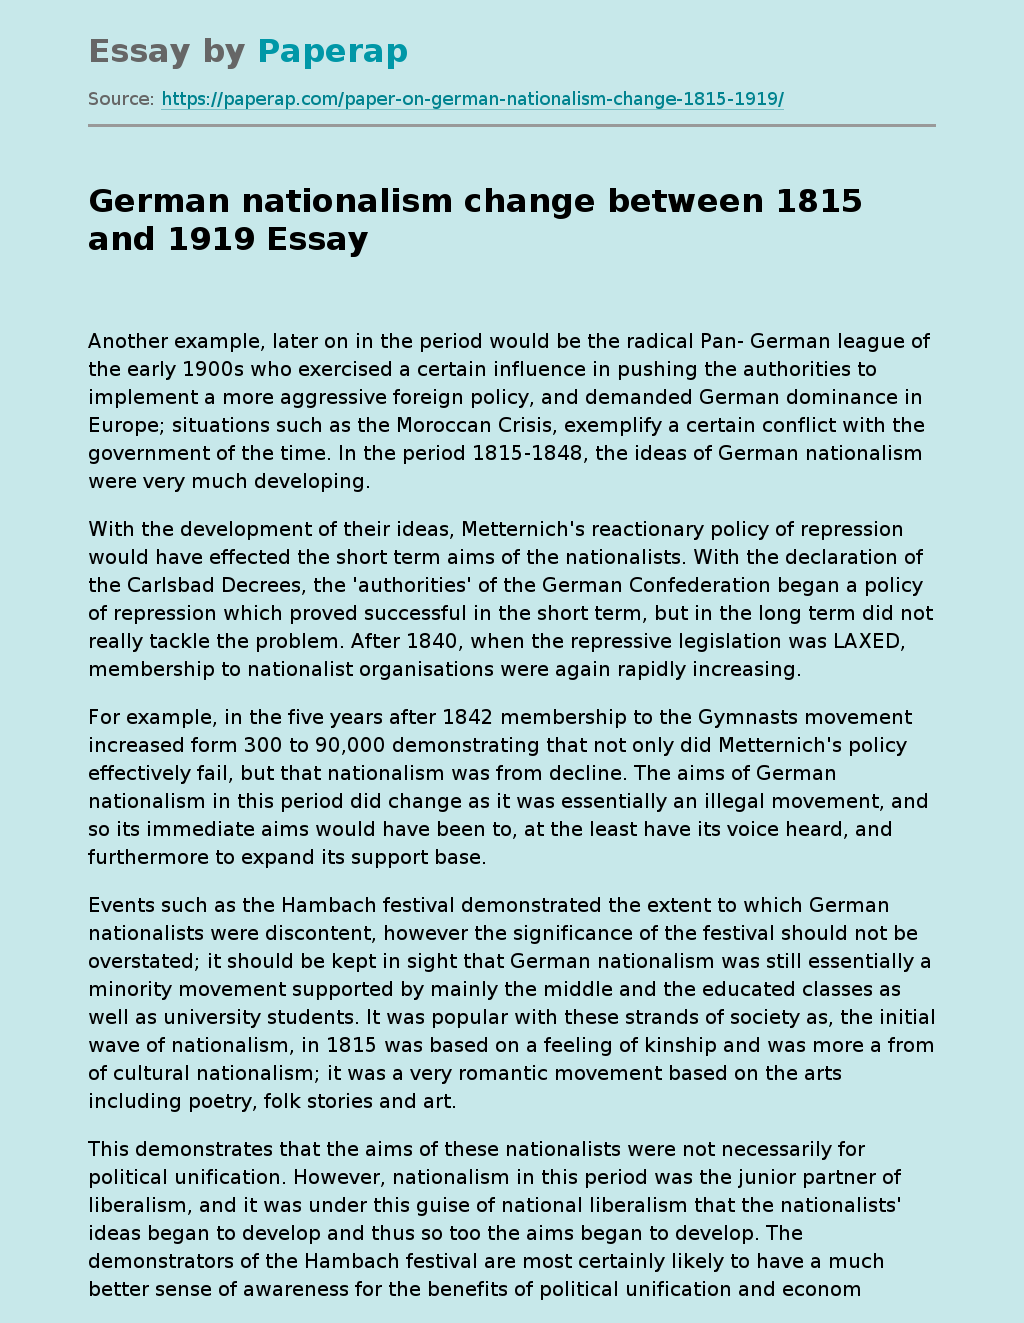 German nationalism change between 1815 and 1919